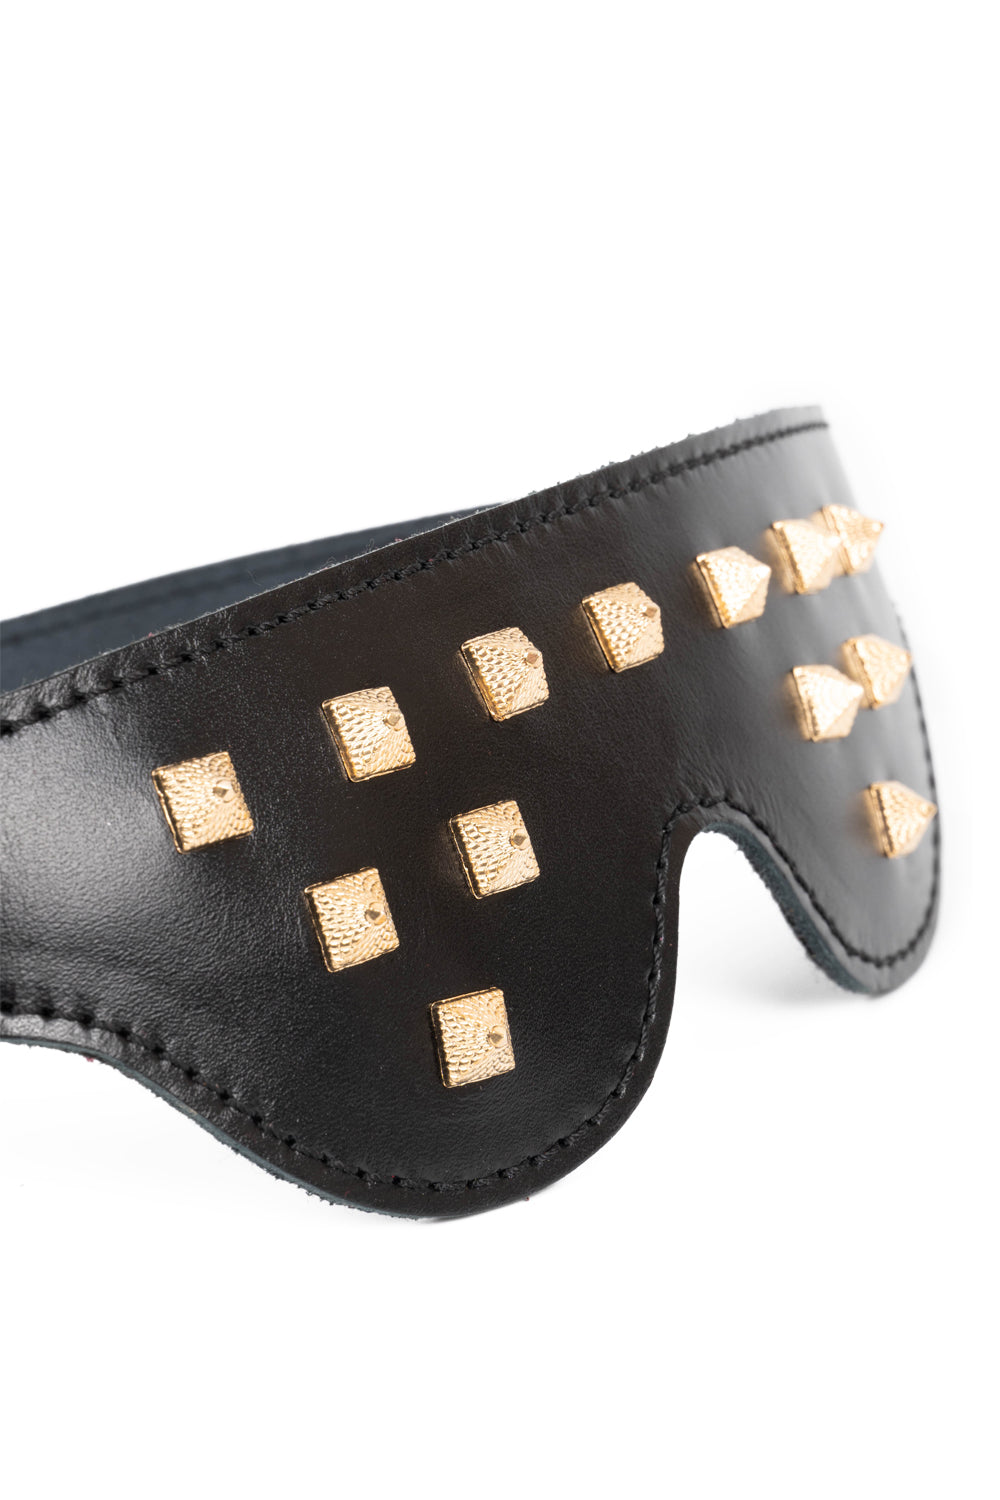 3 in 1 Leather Luxury Set with Spikes. Blindfold Mask, Spanking Paddle, Choker